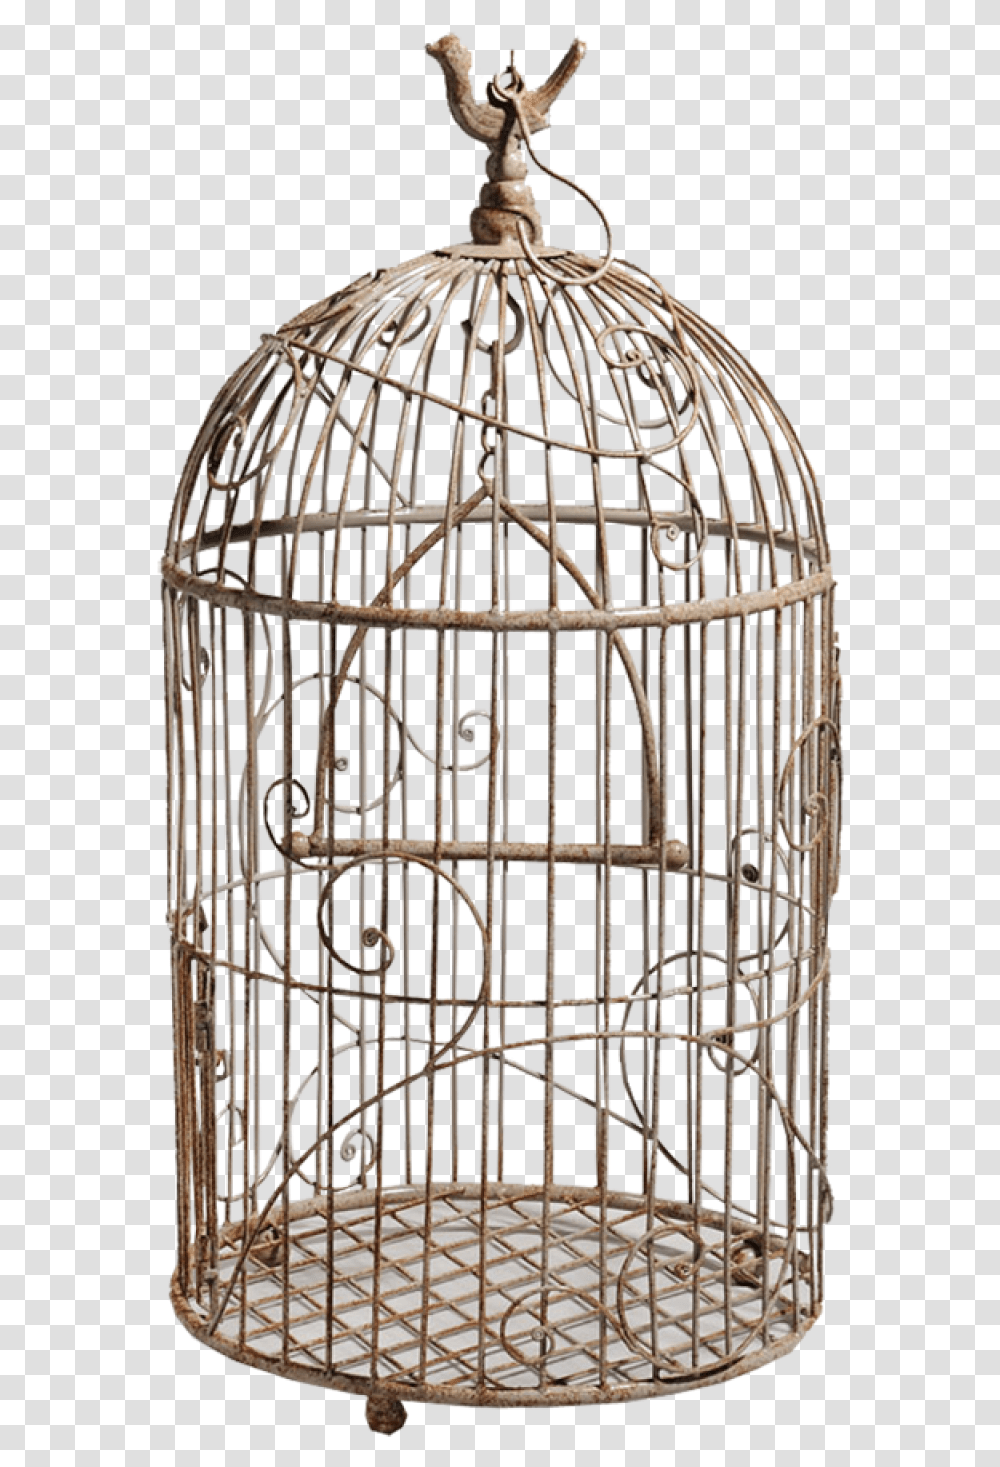 Download Free White Bird Cage Images Background Bird Cage, Gate, Prison, Animal, Parakeet Transparent Png